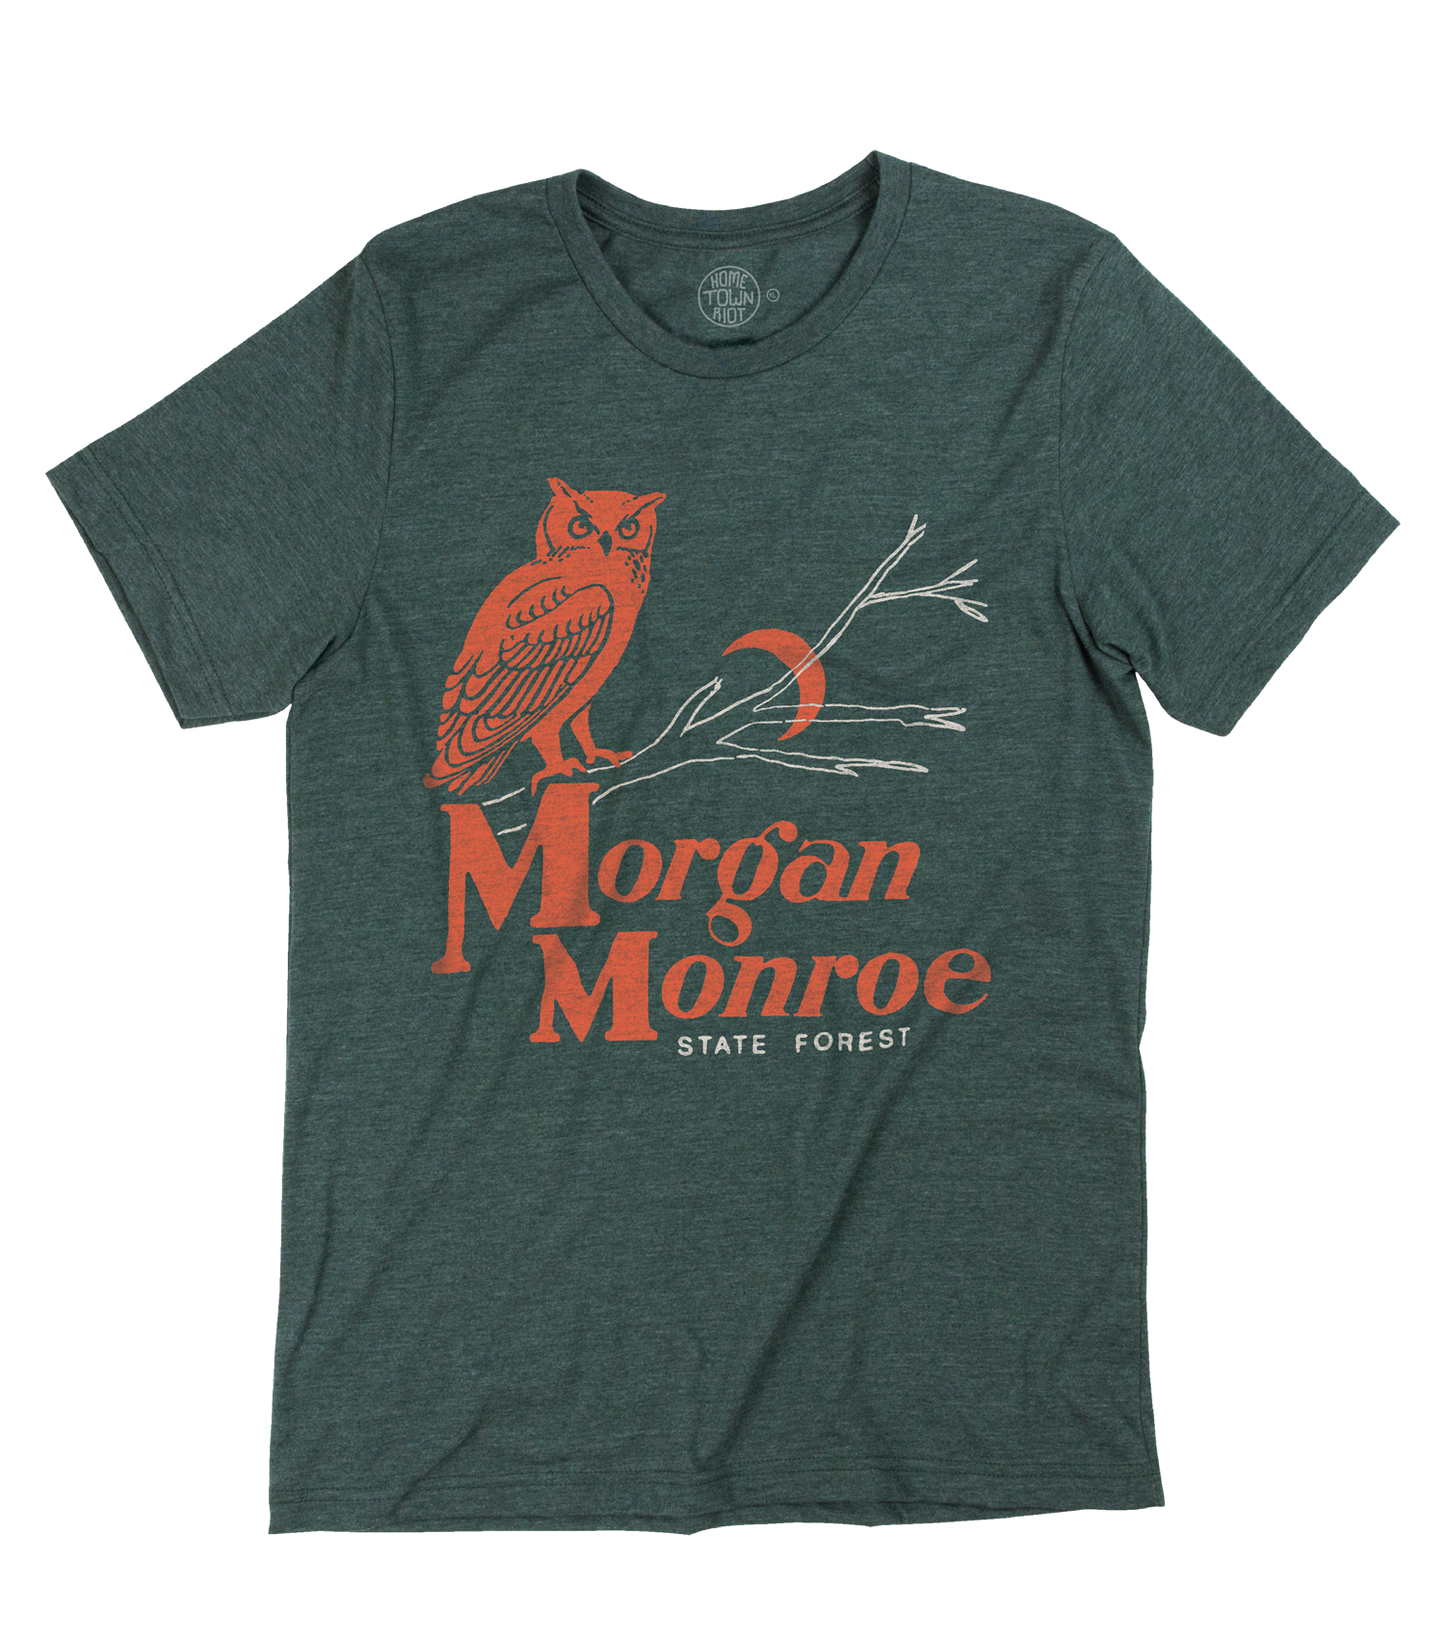 Morgan Monroe State Forest Shirt